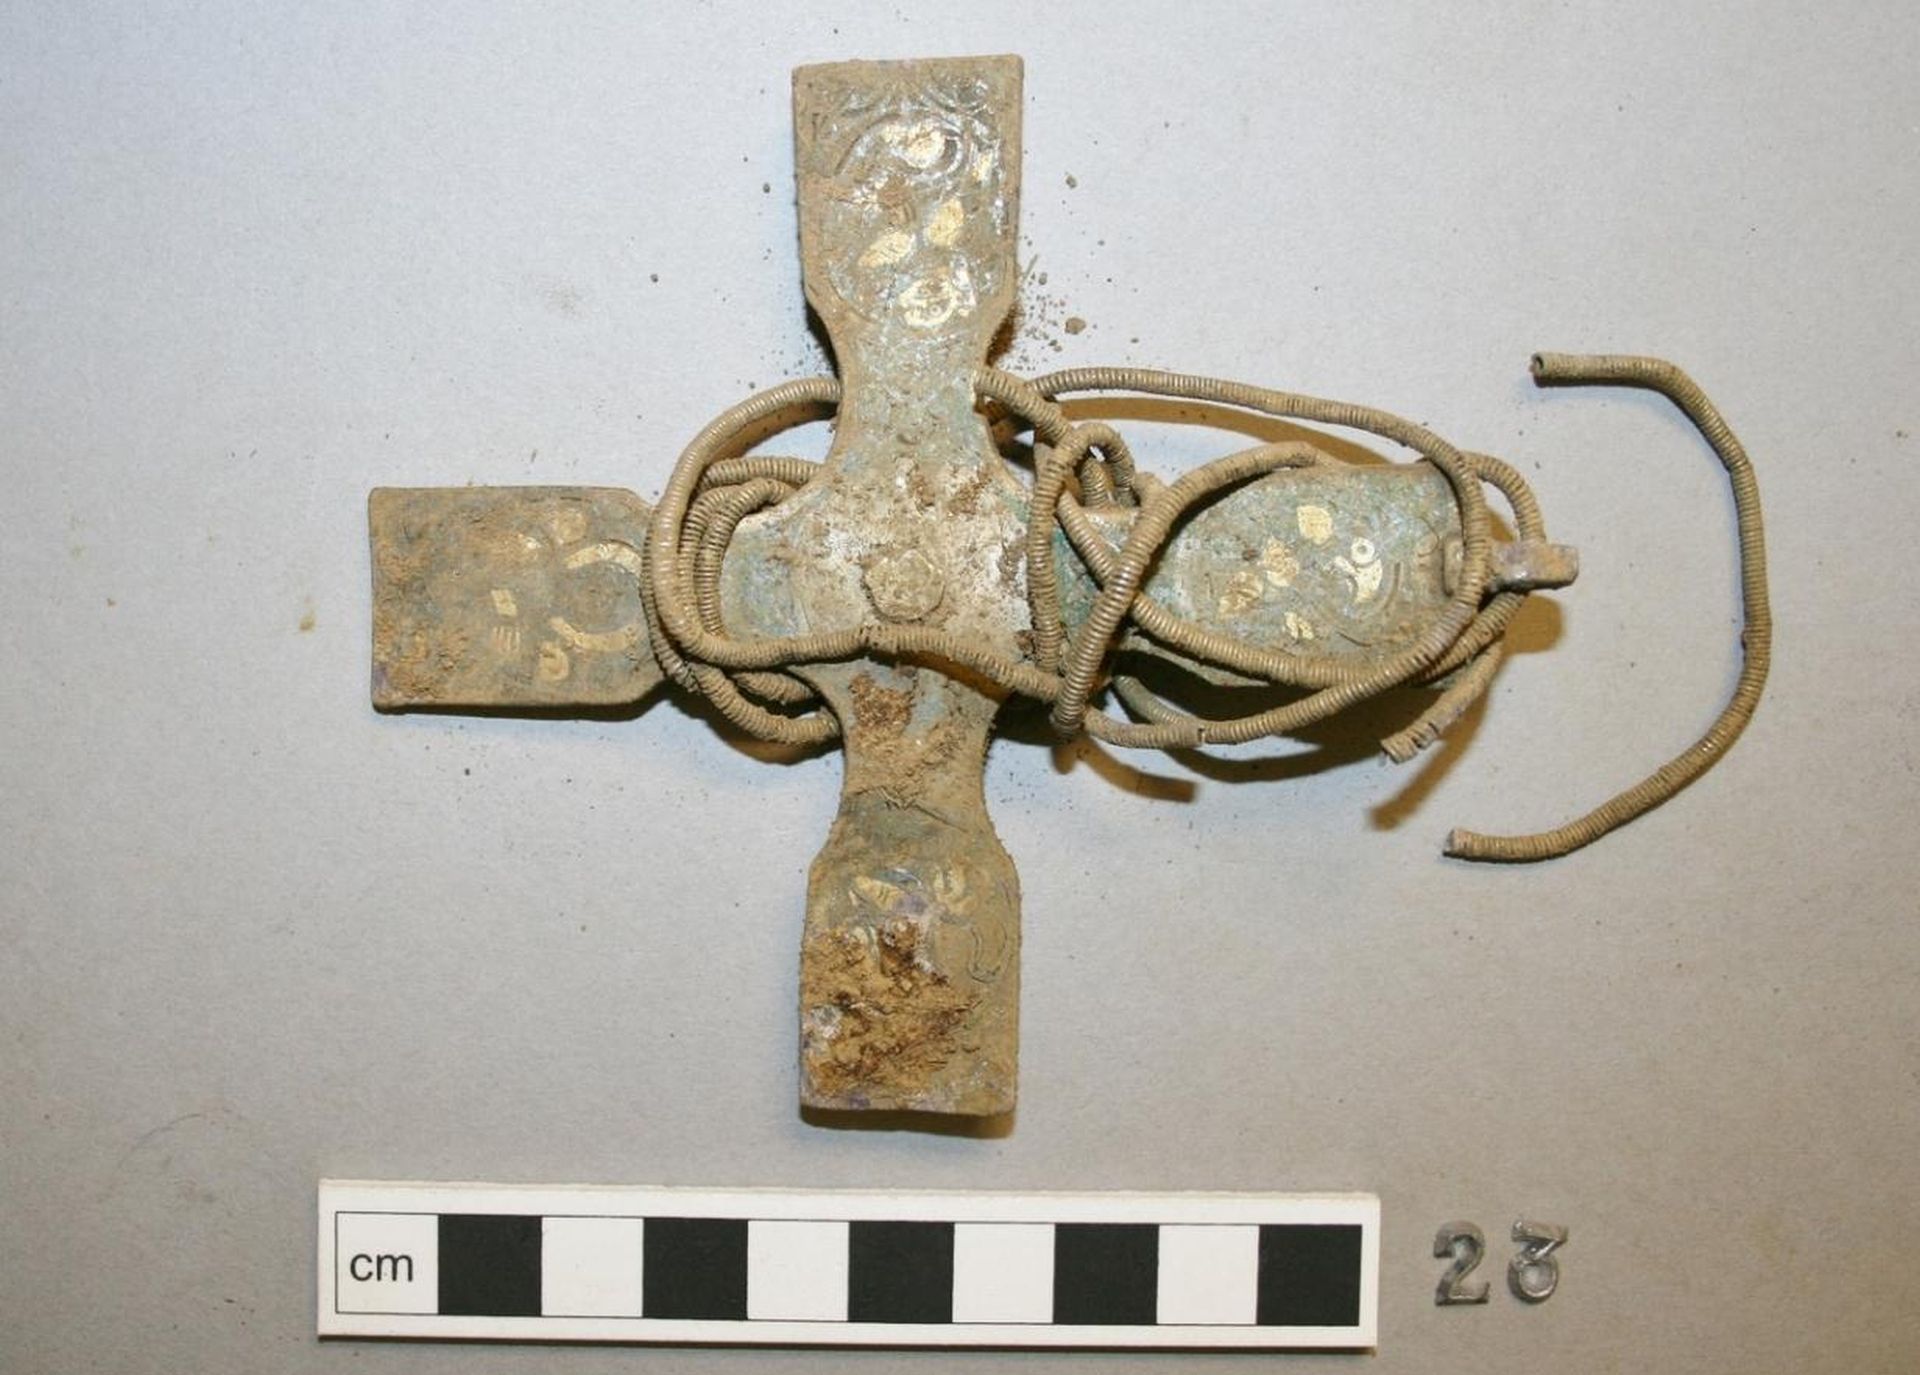 DANSKA Troje amaterskih arheologa pronašlo zlatno vikinško blago